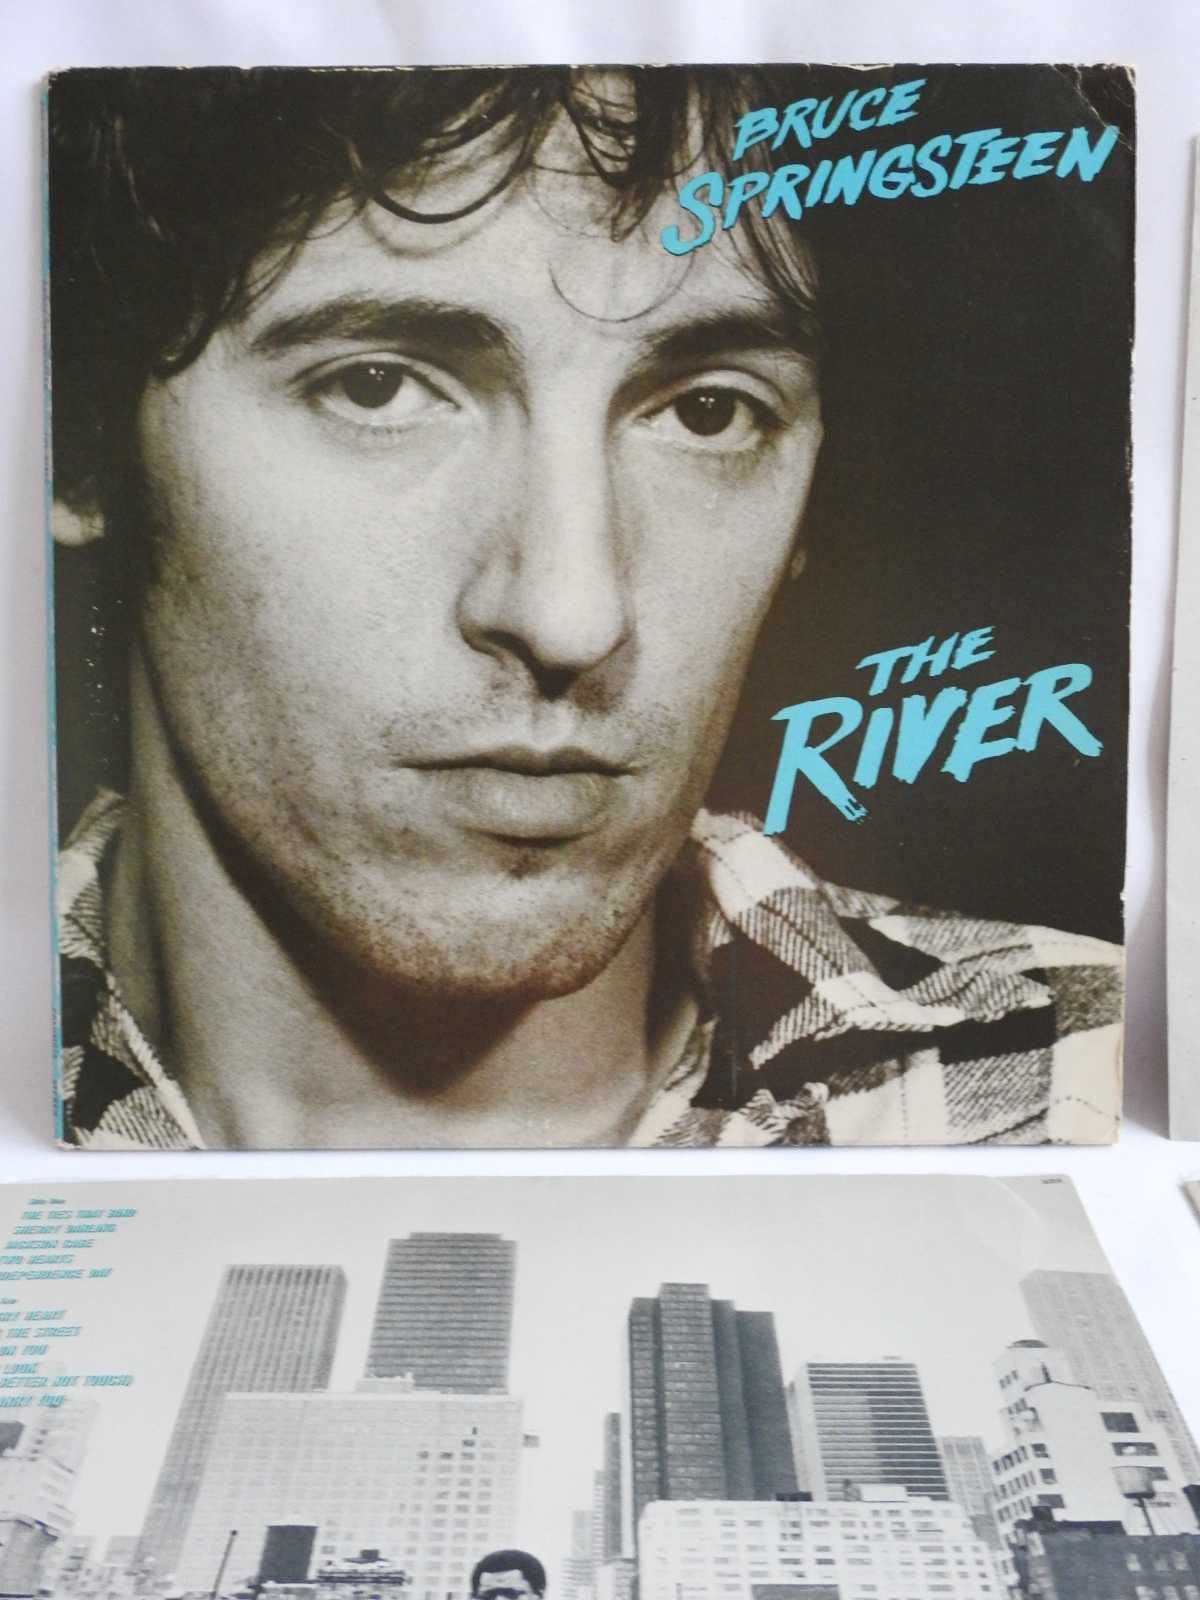 Bruce Springsteen The River LP 1980 USA пластинка VG+ 1press оригинал